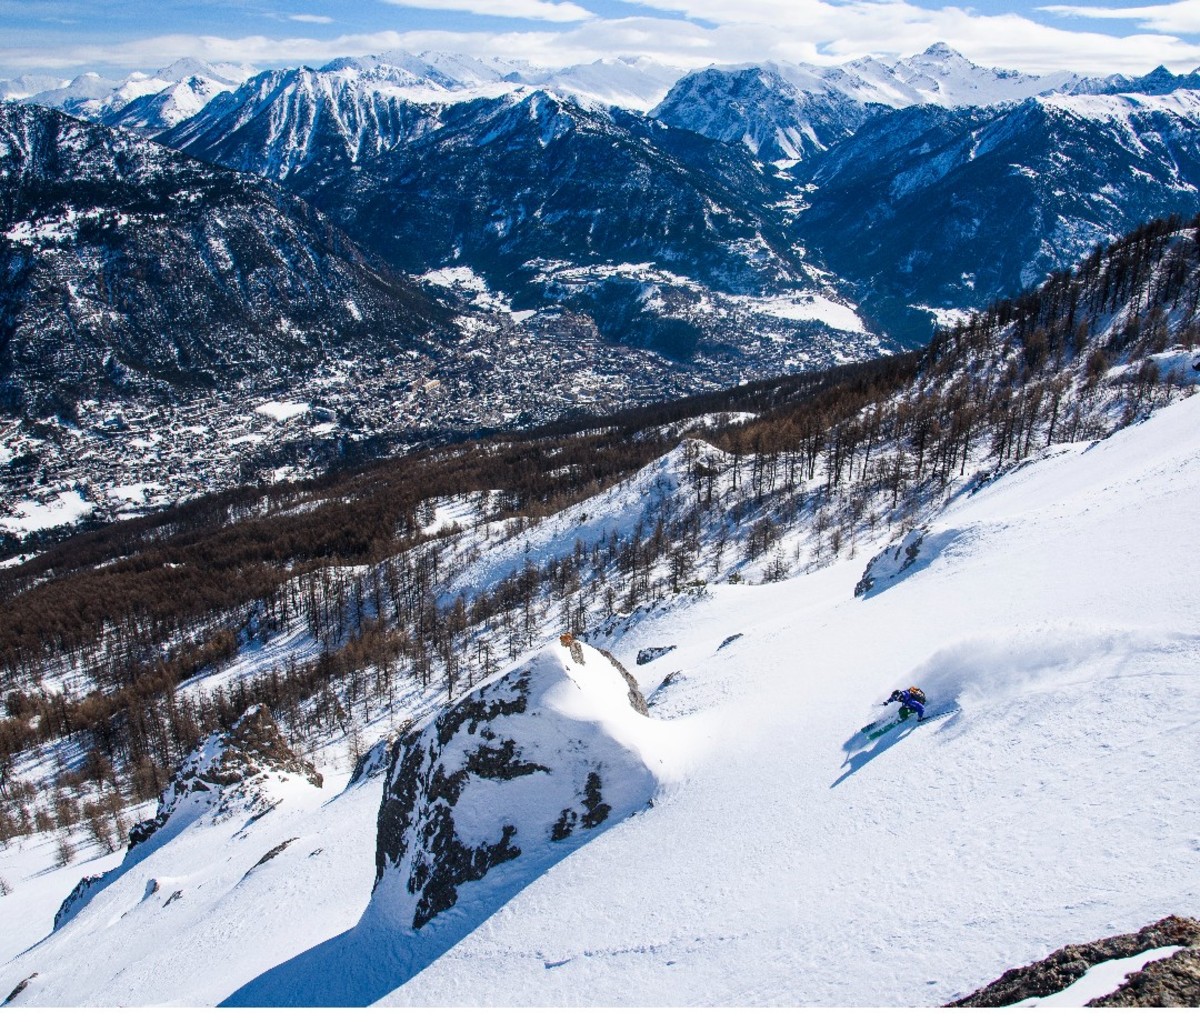 Long shot of skier on a powdery slope, European alps.